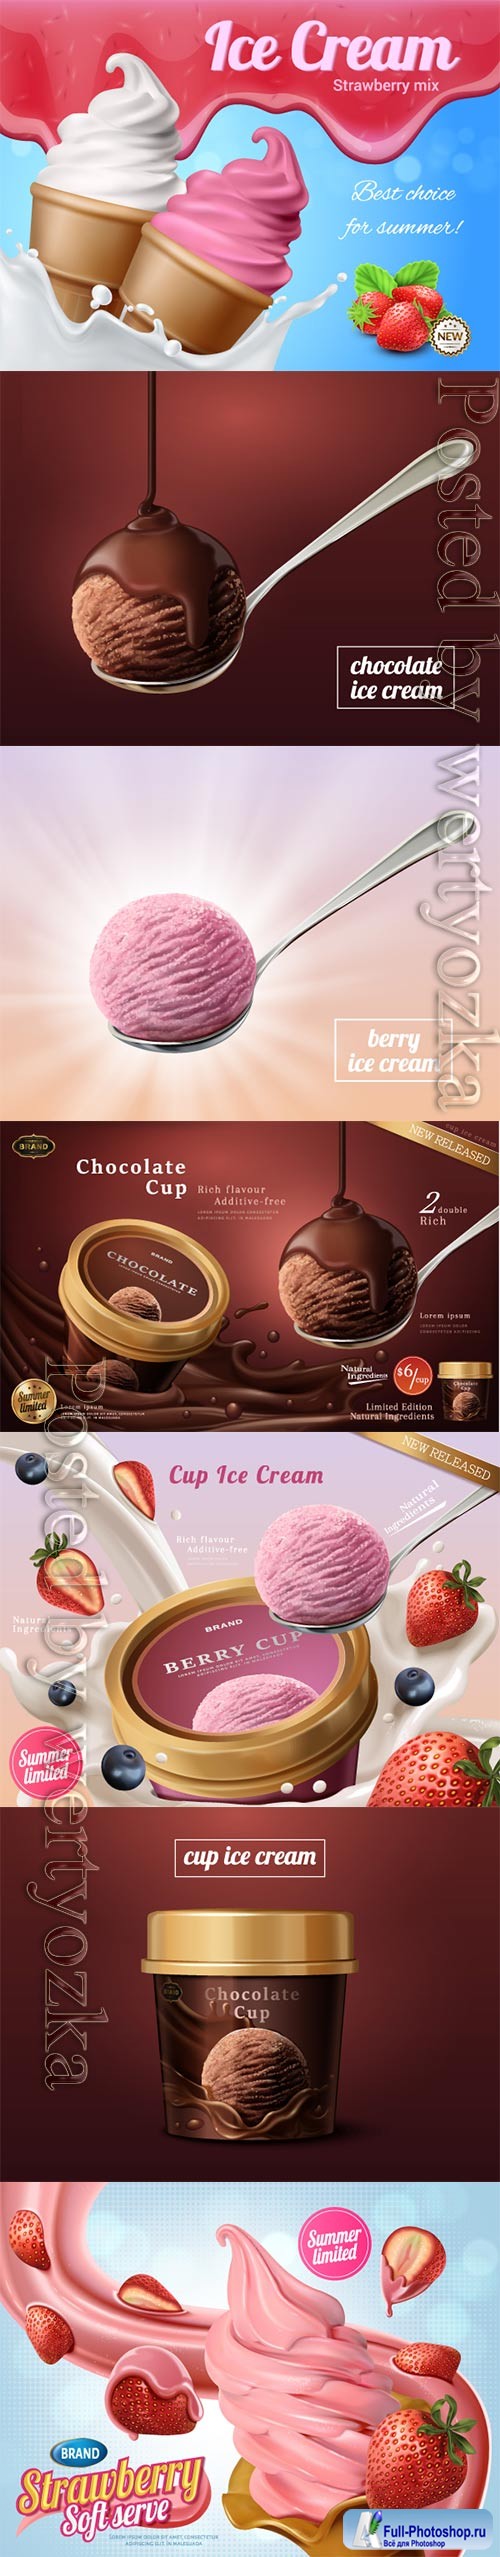 Ice cream advertisement vector collection